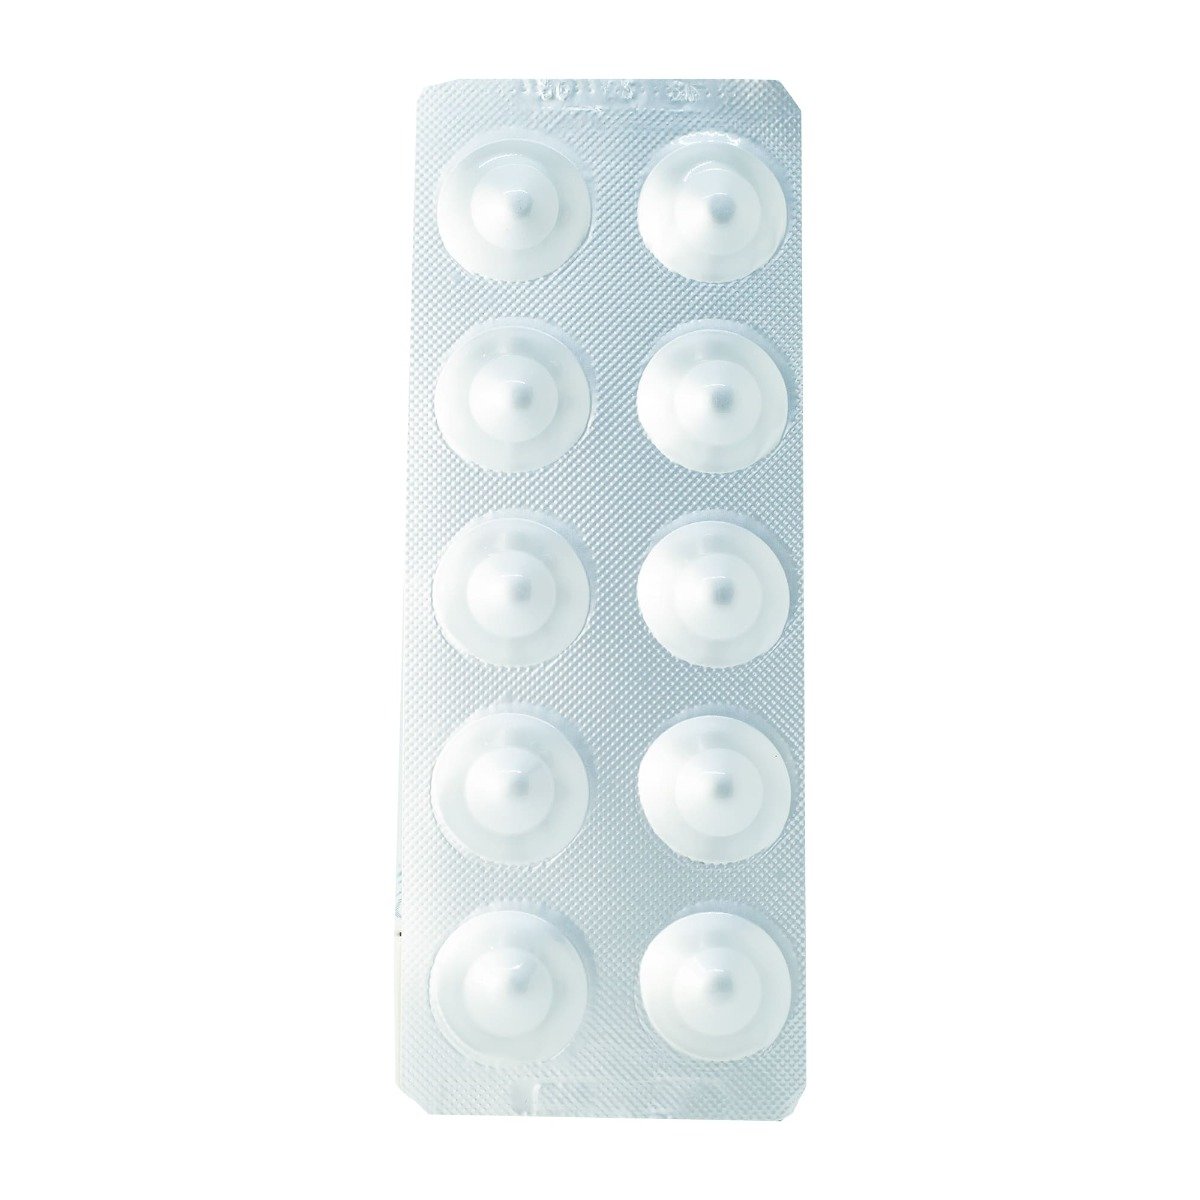 Bladogra 50 mg - 30 Tablets - Bloom Pharmacy